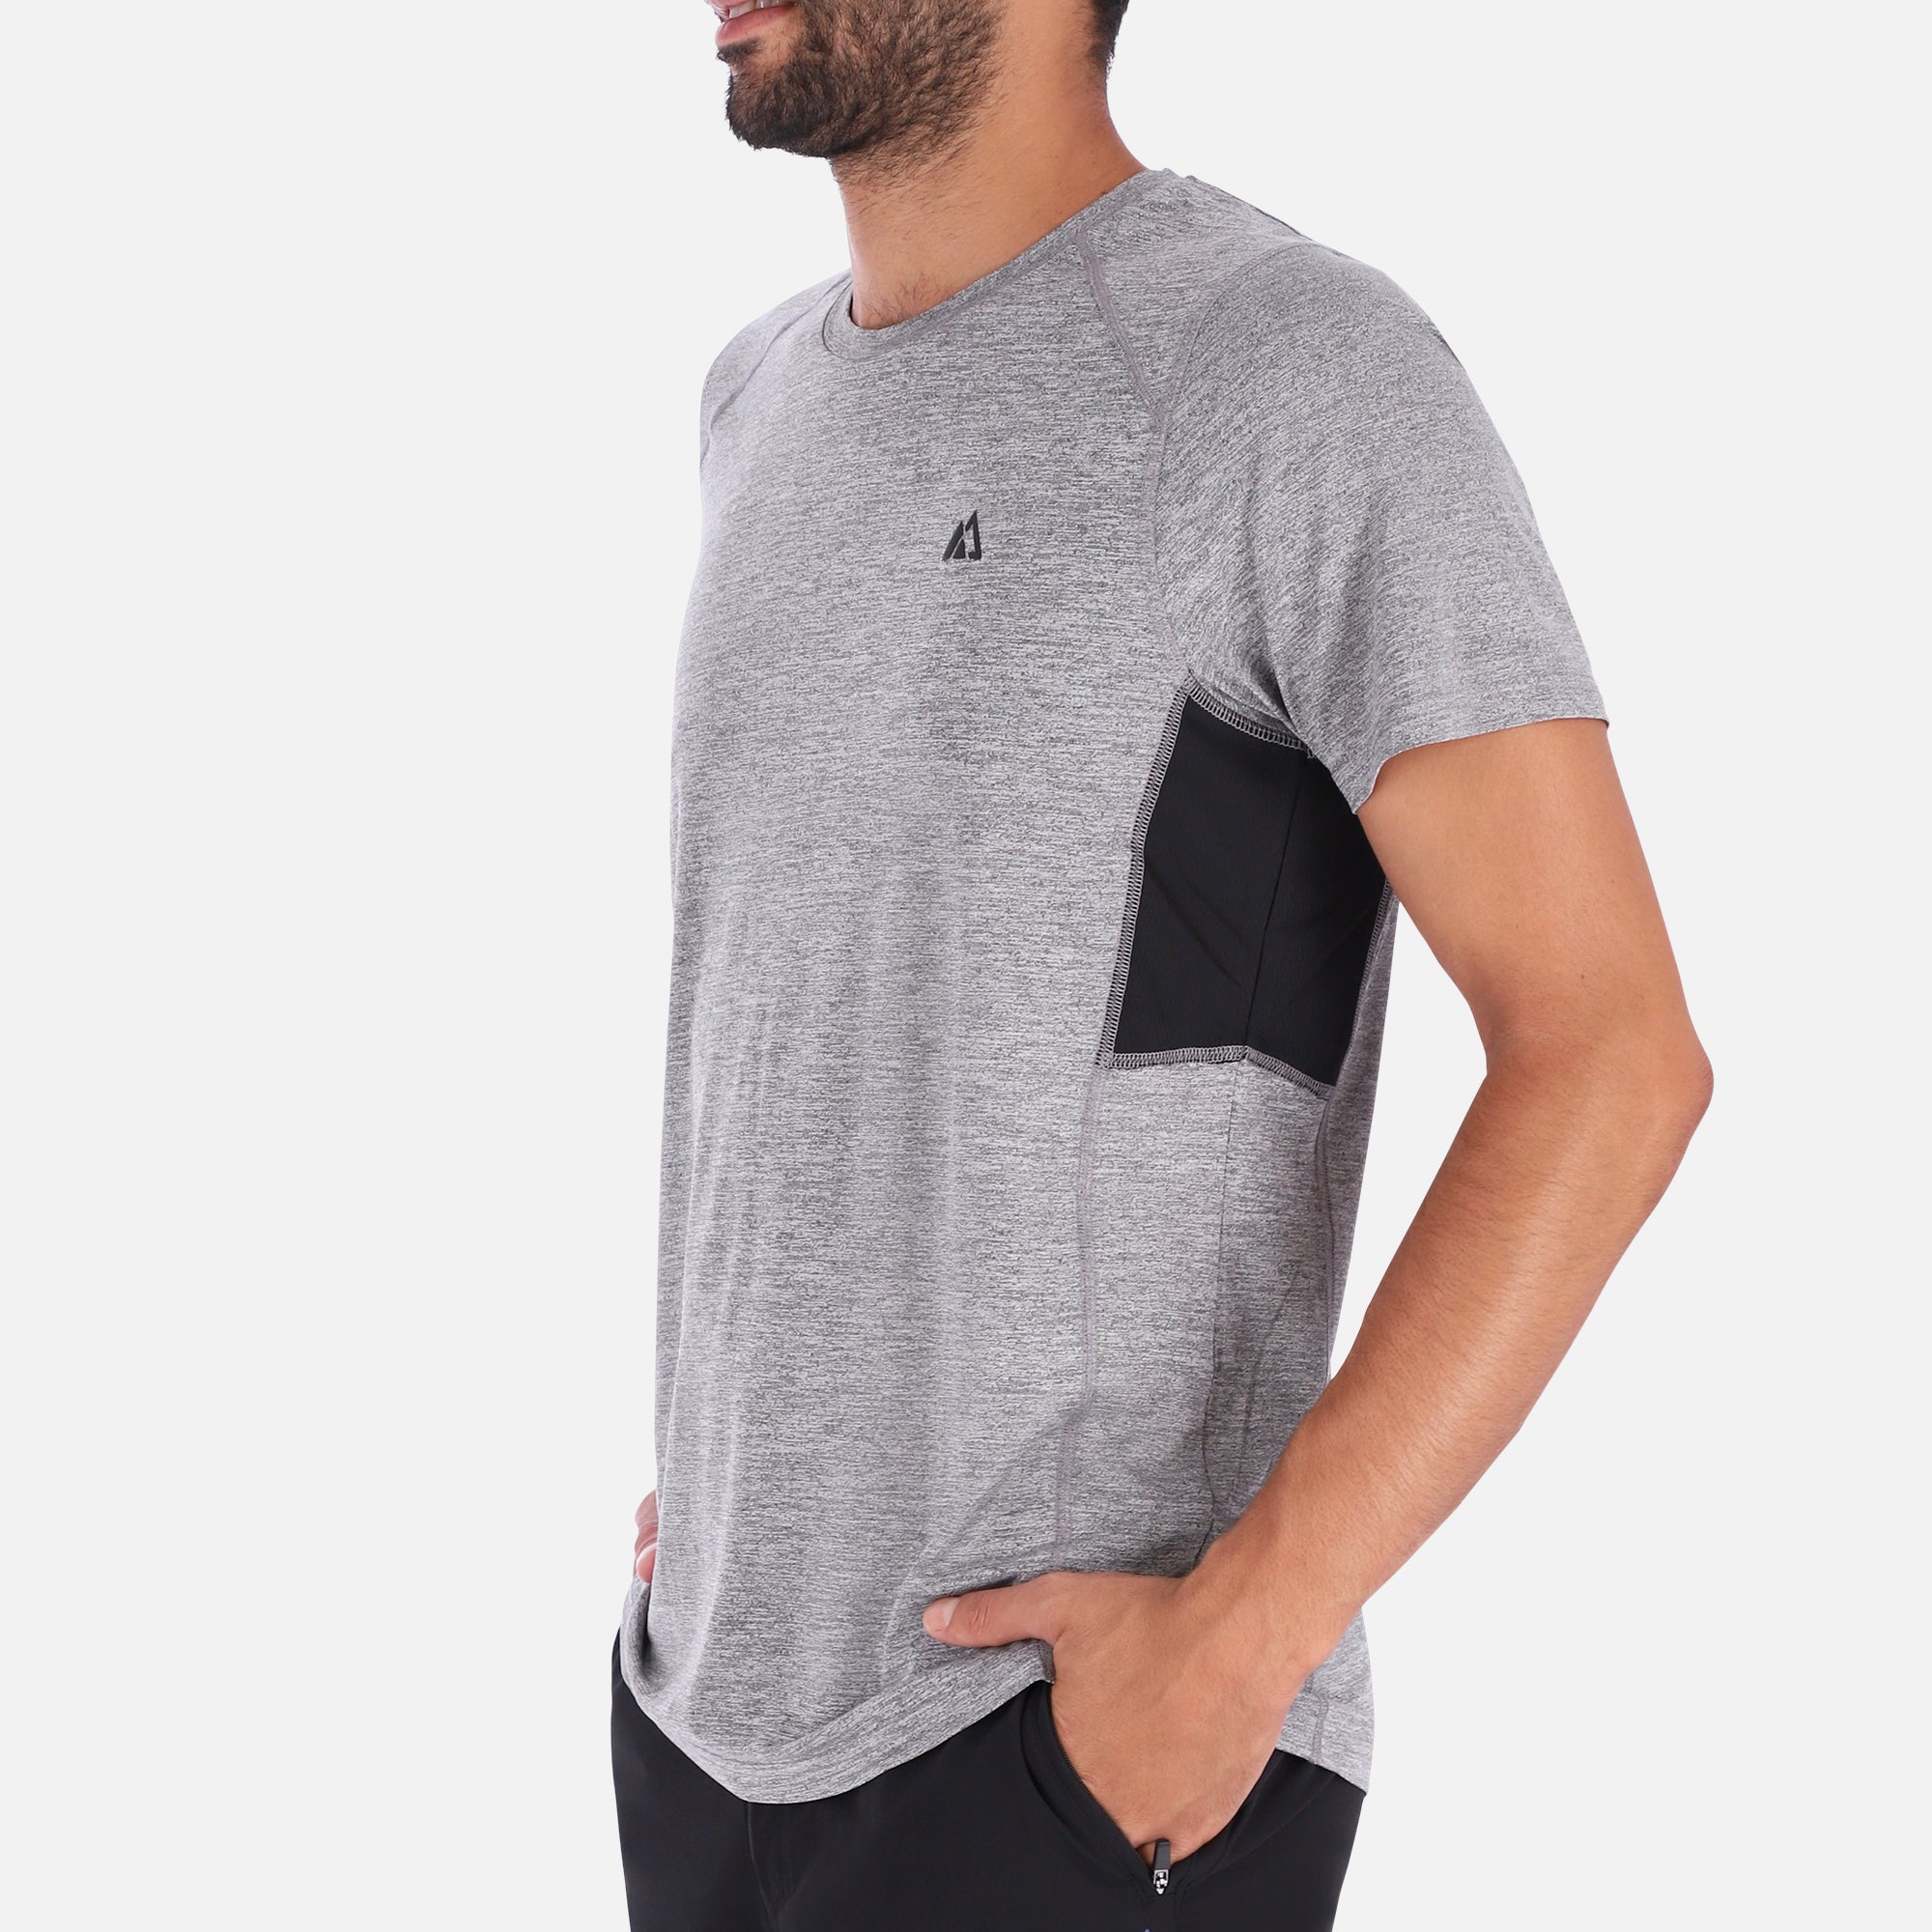 QuickDry Shirt - Gray